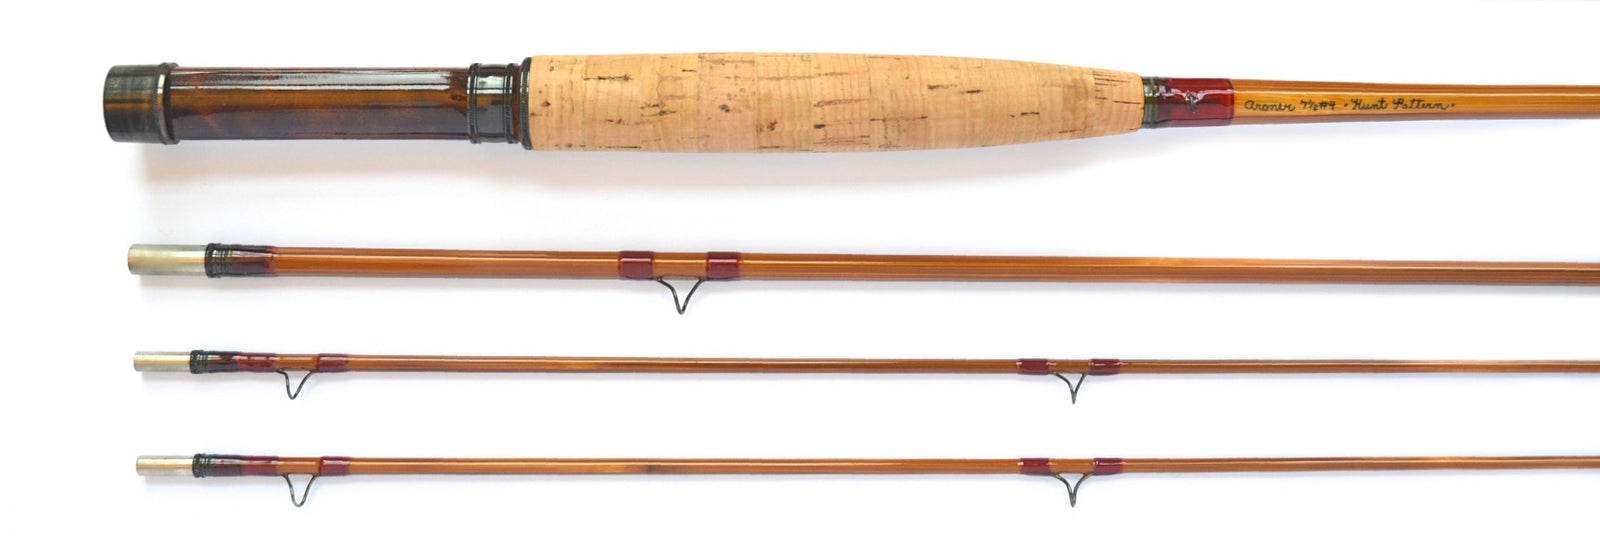 Vintage Fly Fishing, Bamboo, Flyfishing Tackle, Fishing Case